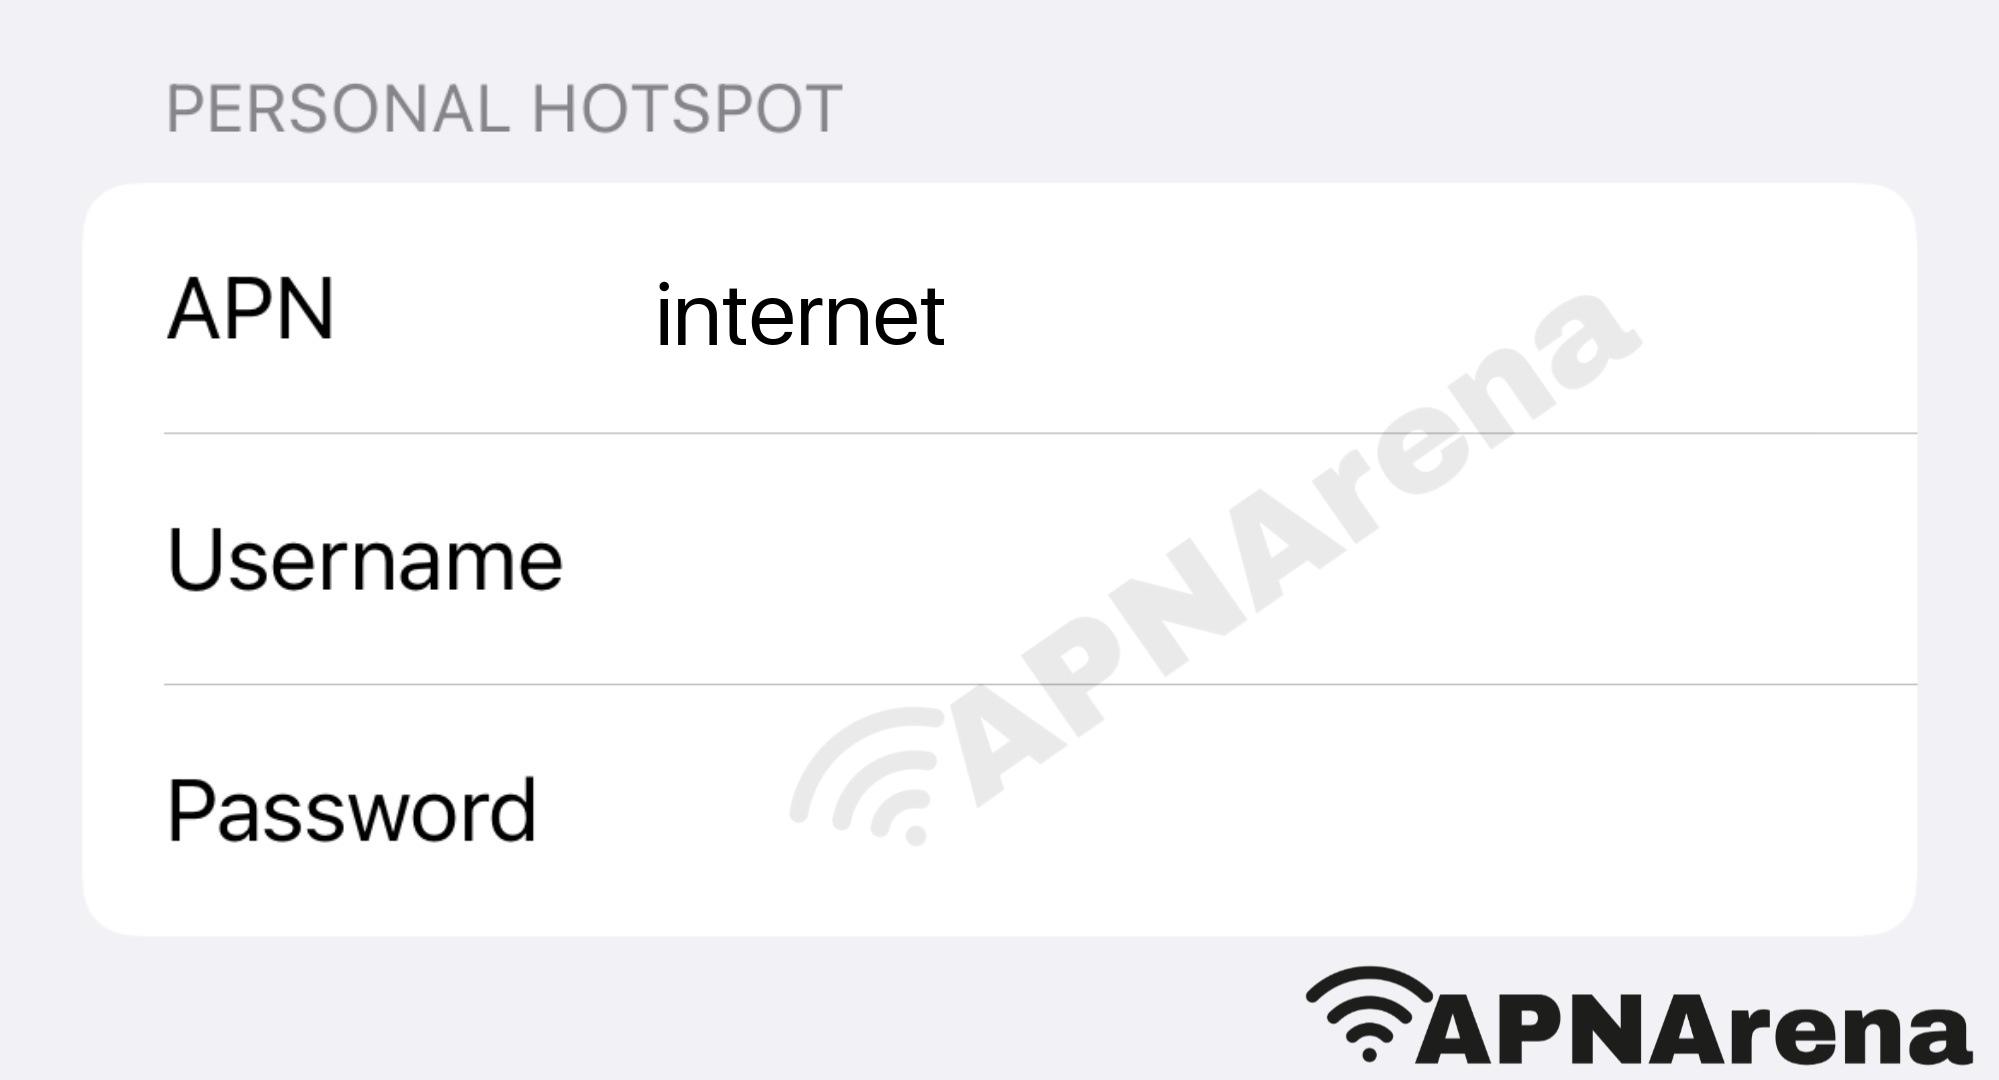 TerraCom Wireless Personal Hotspot Settings for iPhone